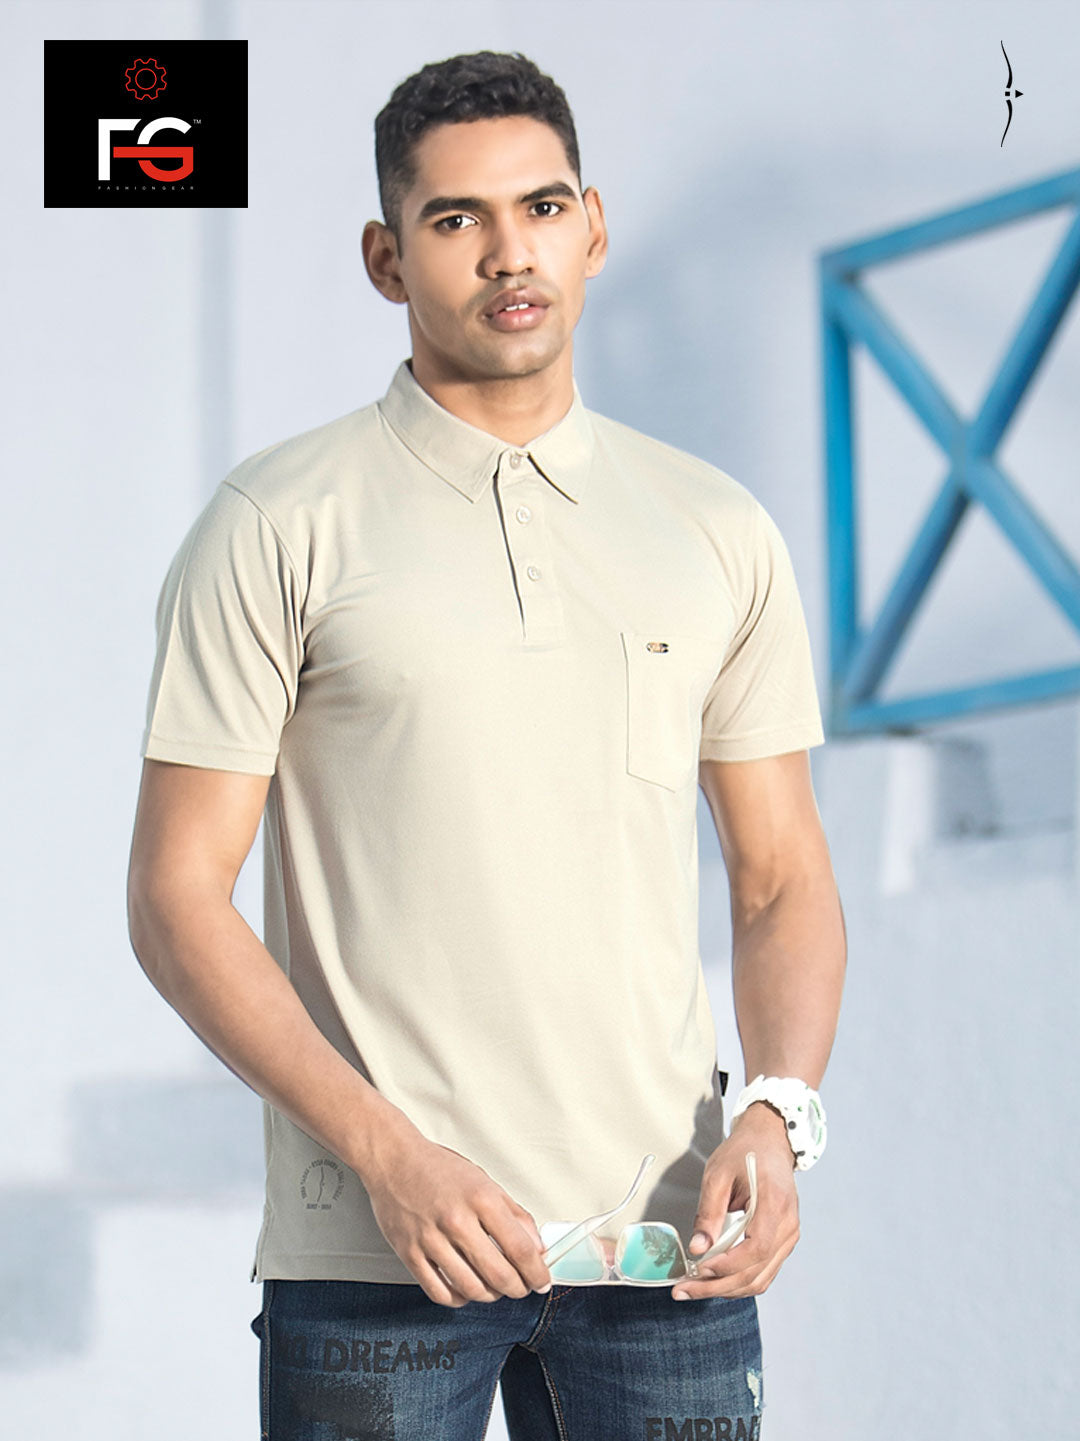 f.g-1225 collar half sleeve half white polo tshirt for men#color_beige